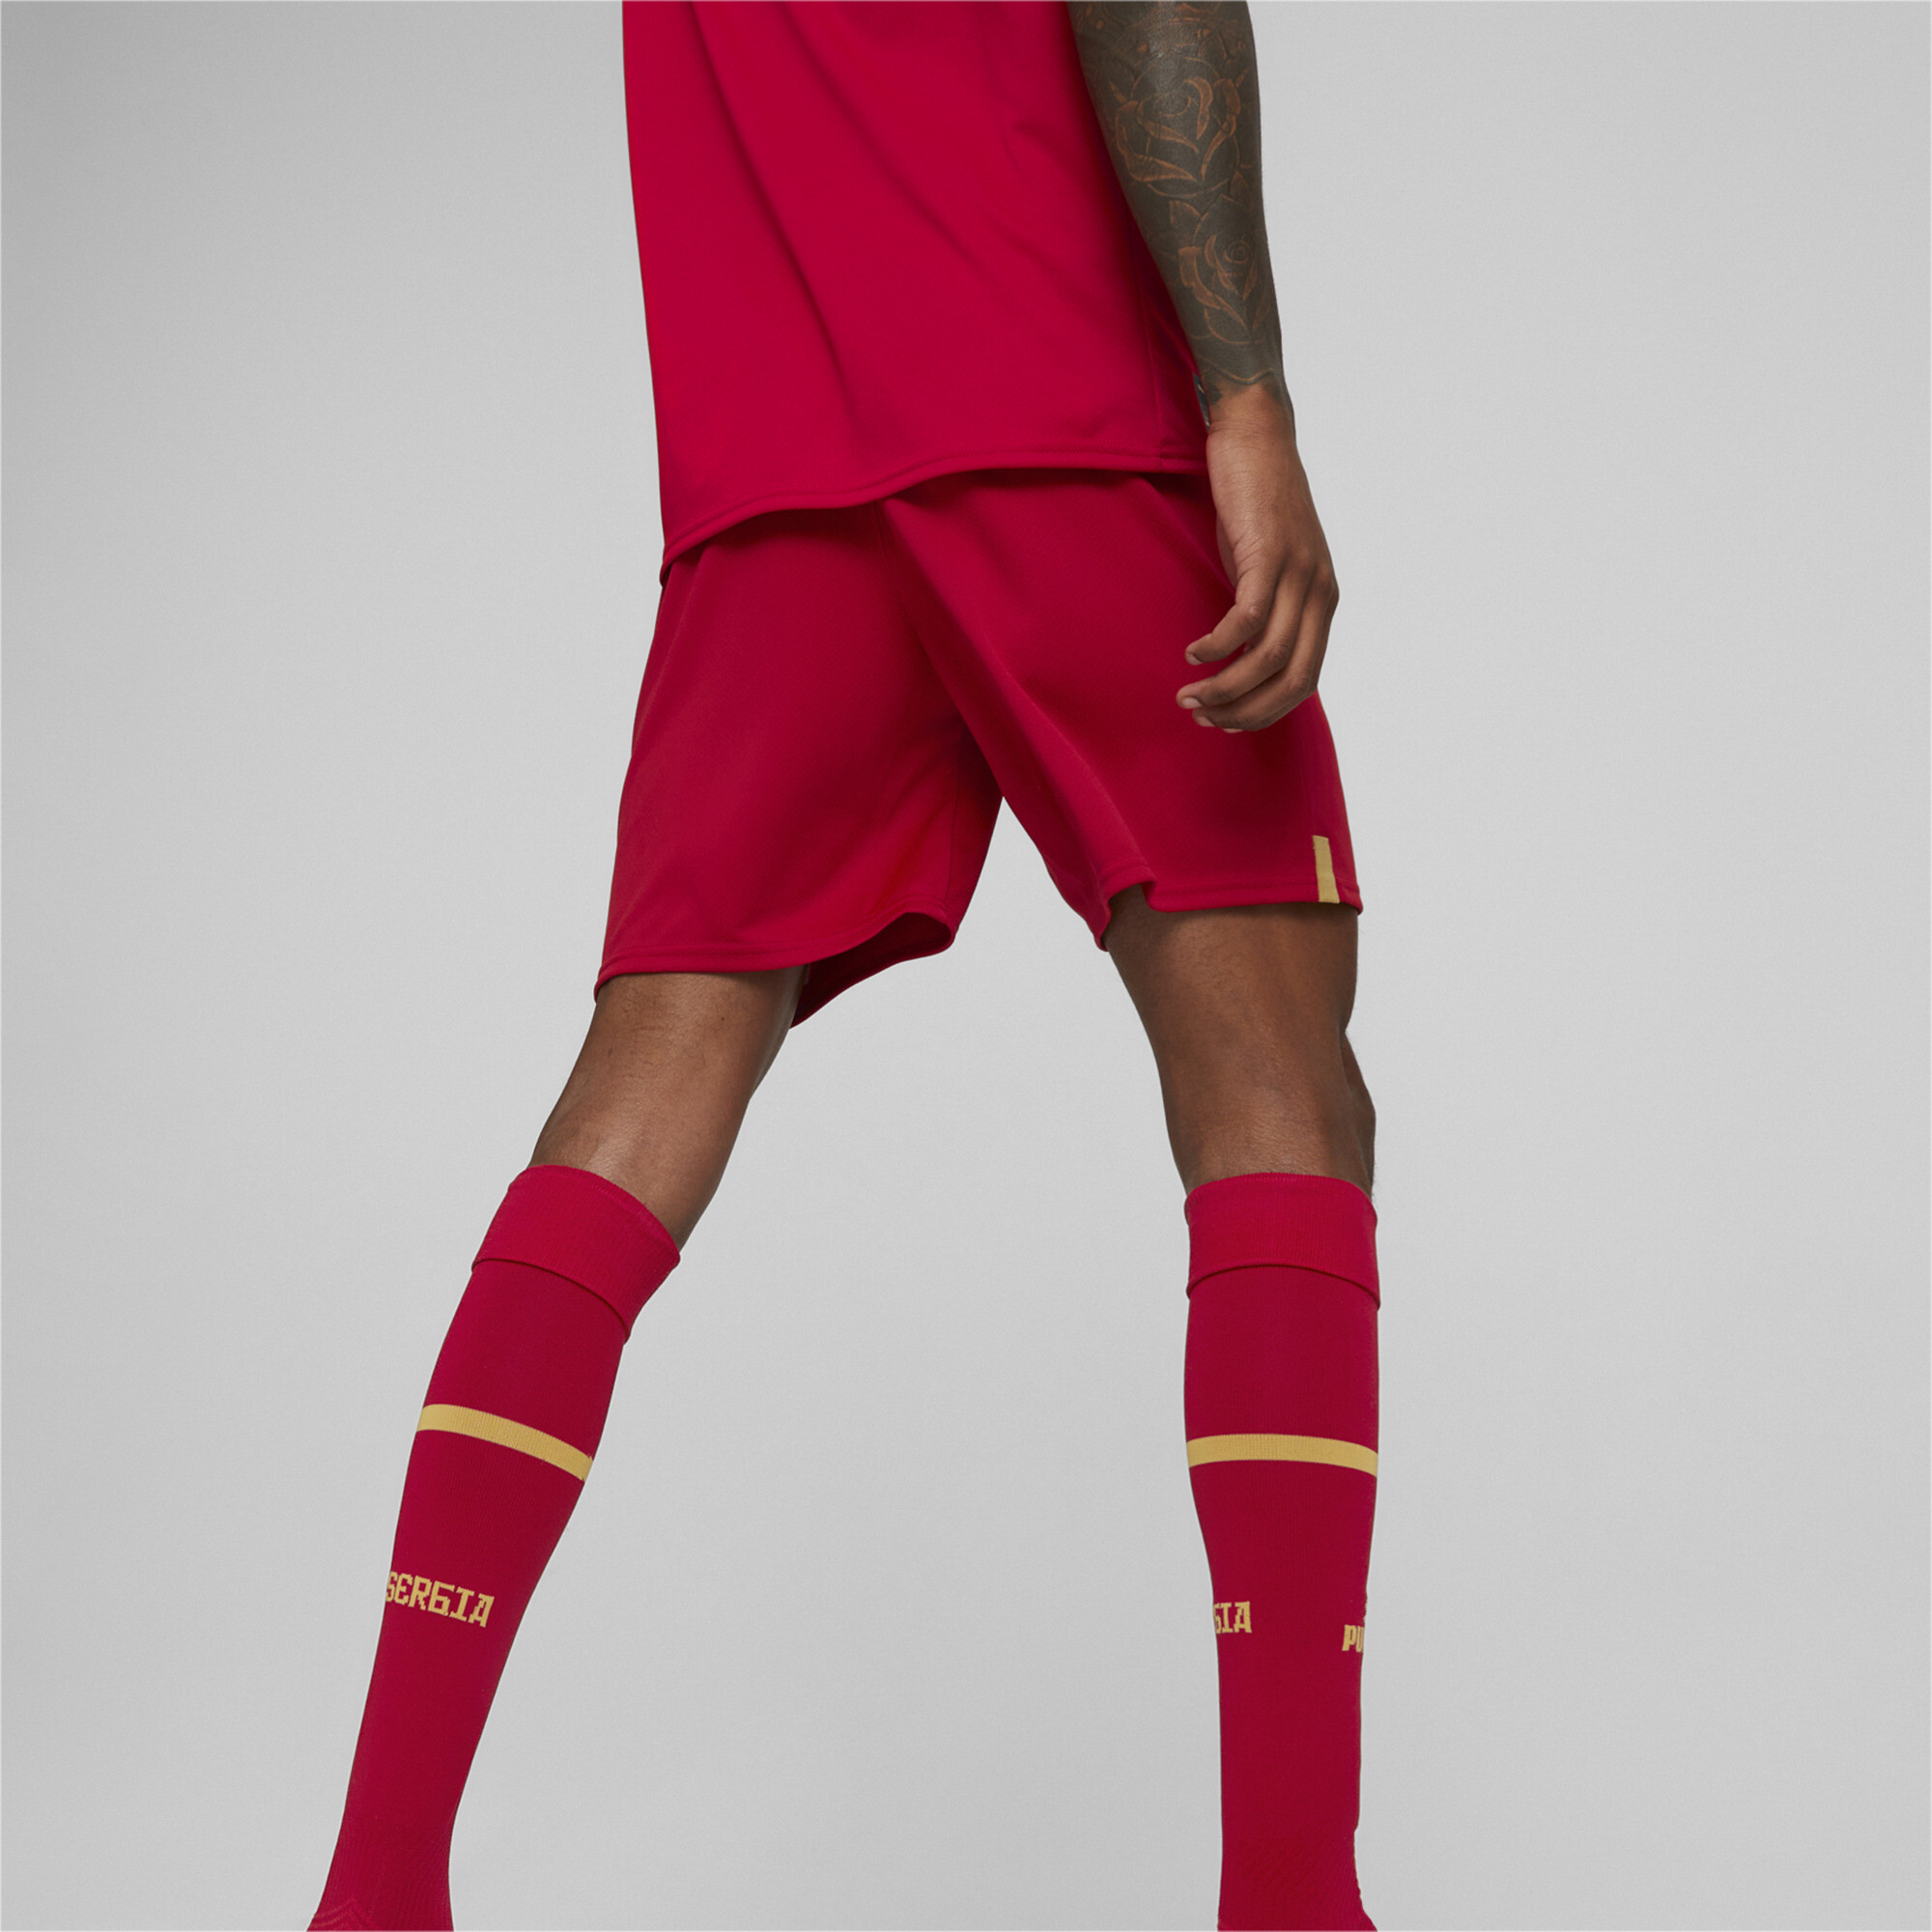 Men's Puma Serbia 22/23 Replica Shorts, Red, Size 3XL, Clothing